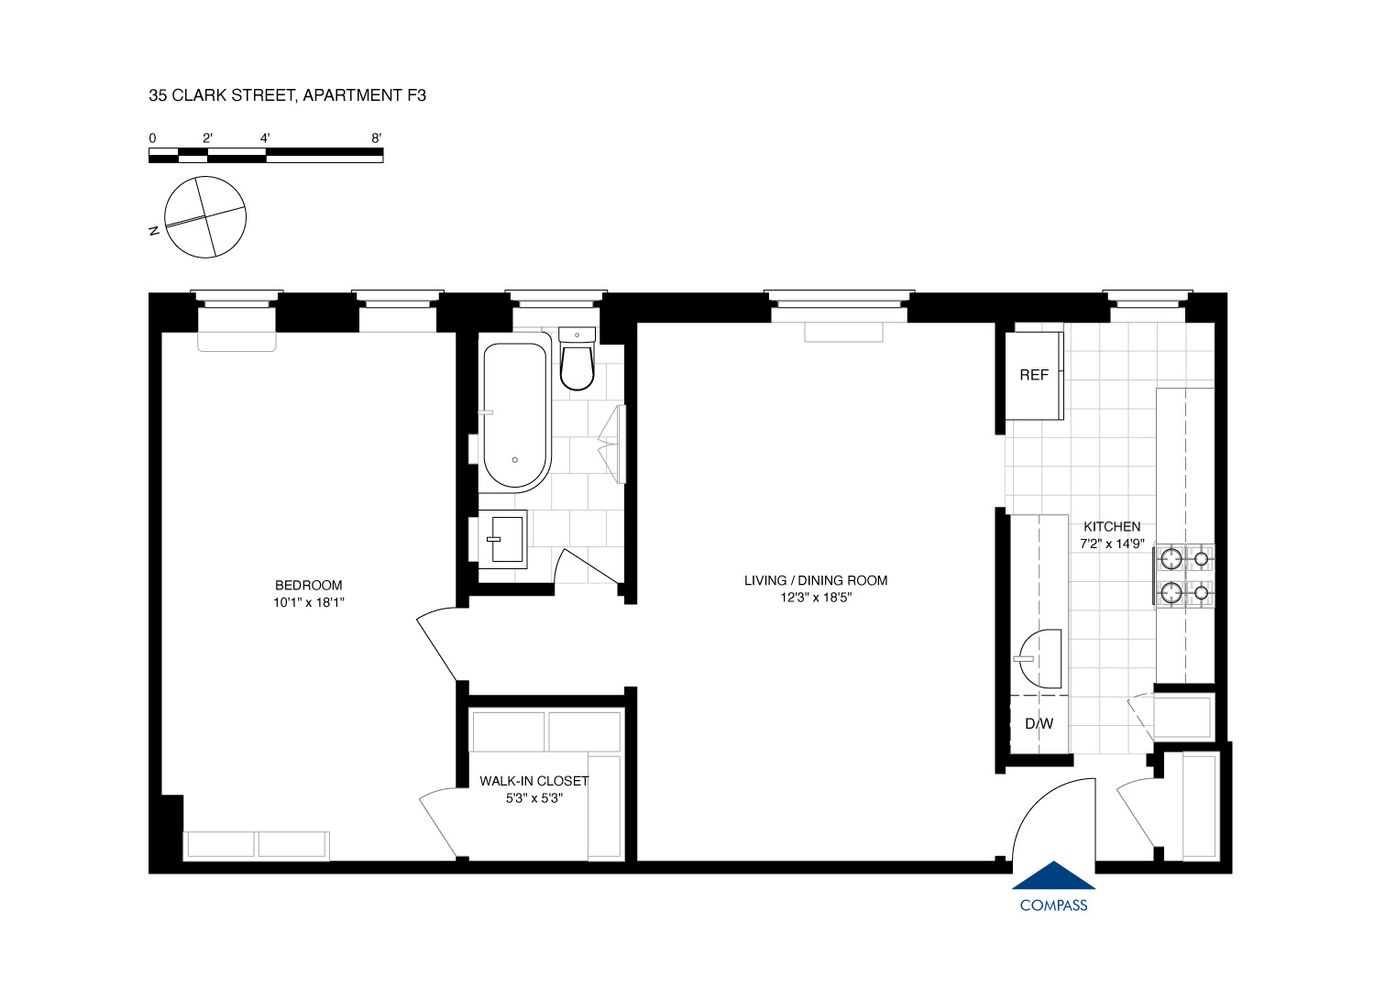 floorplan of unit f3 35 clark street